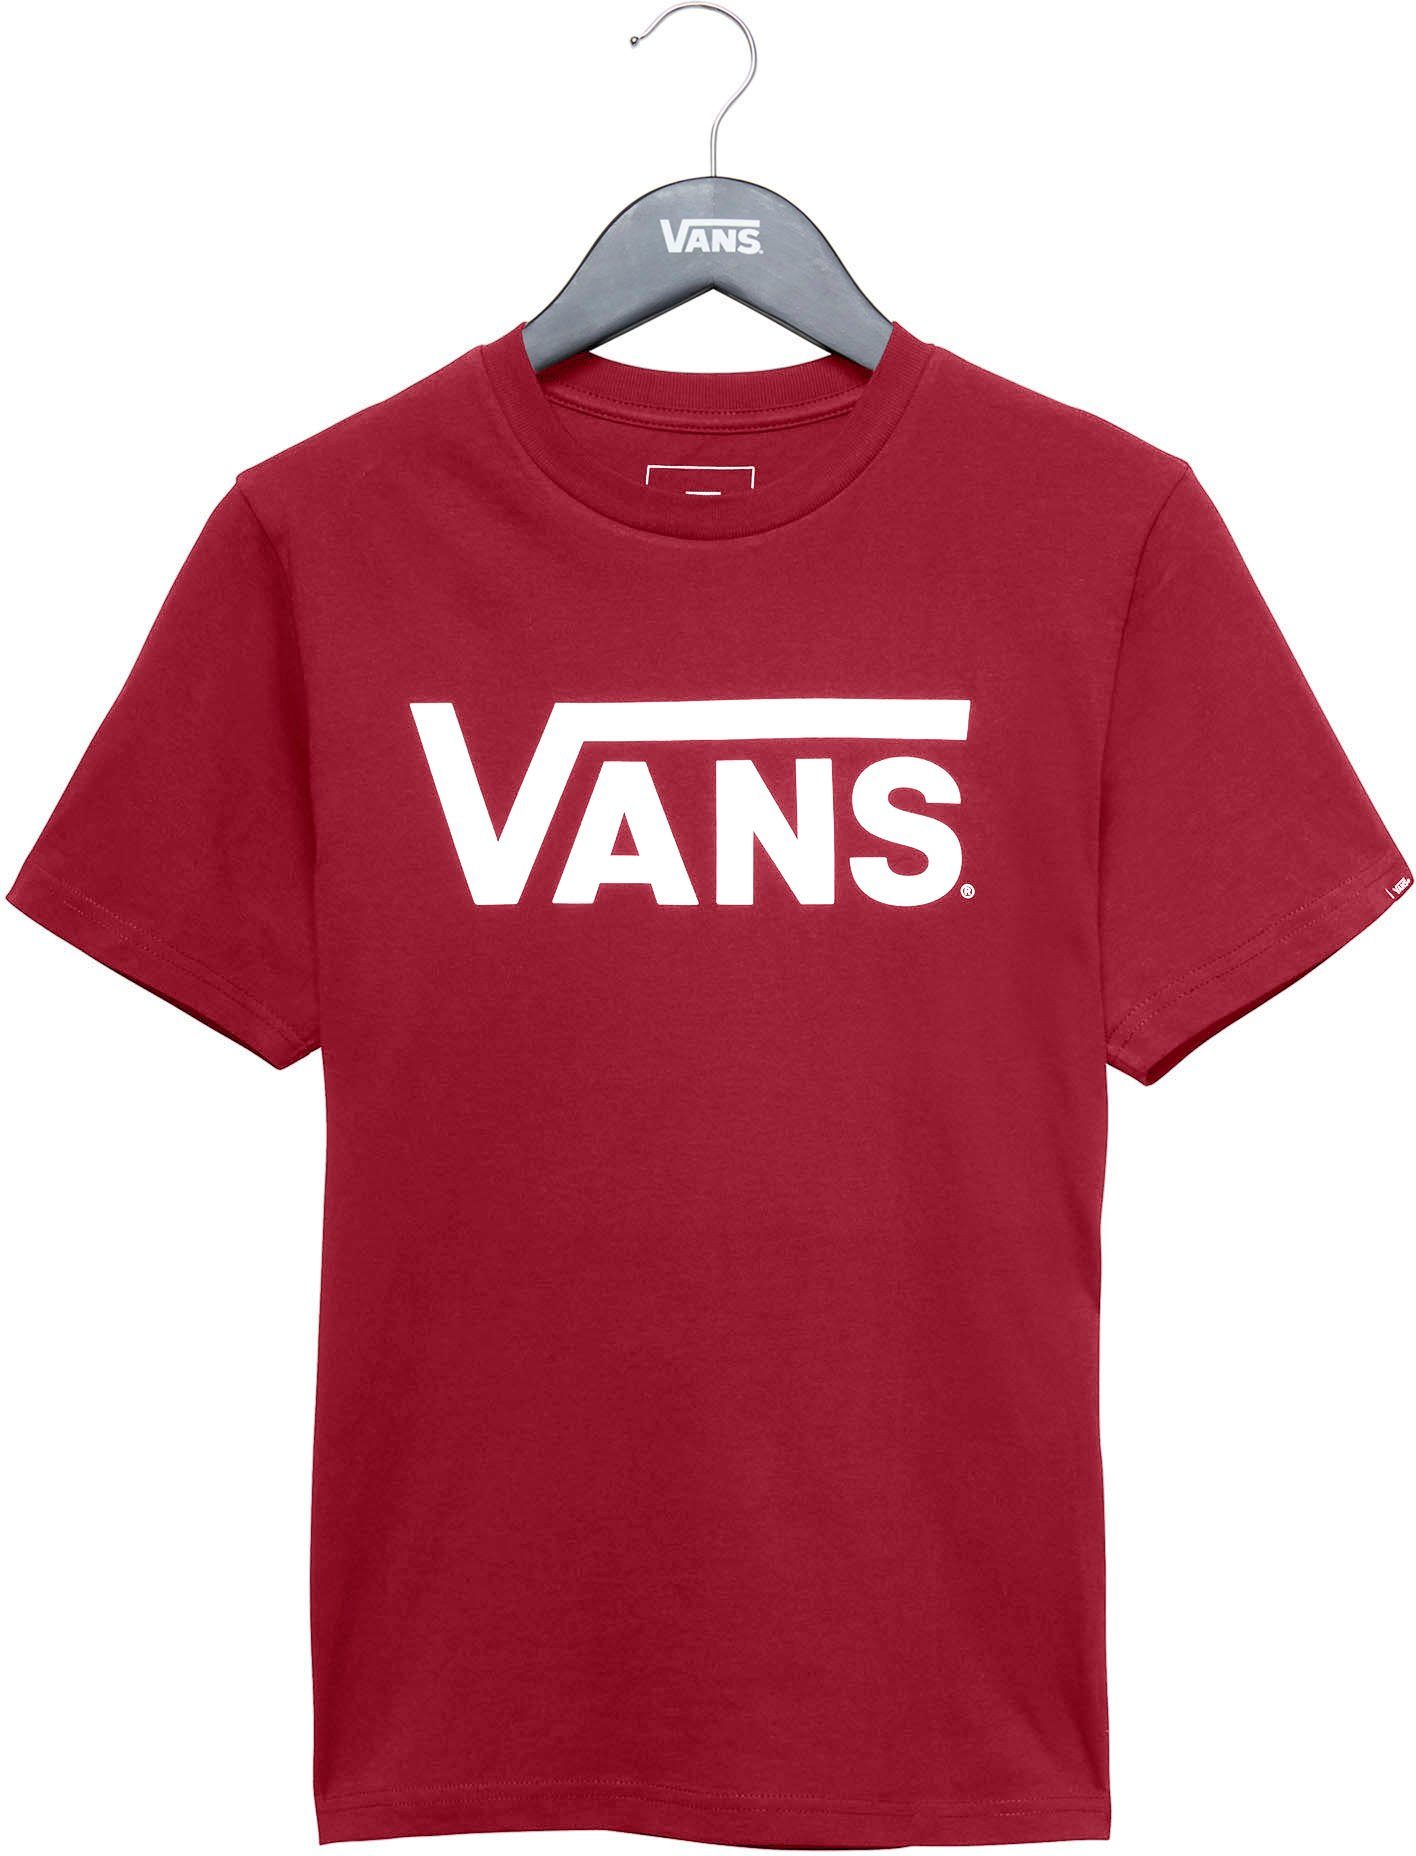 Vans CLASSIC VANS chili pepper BOYS T-Shirt